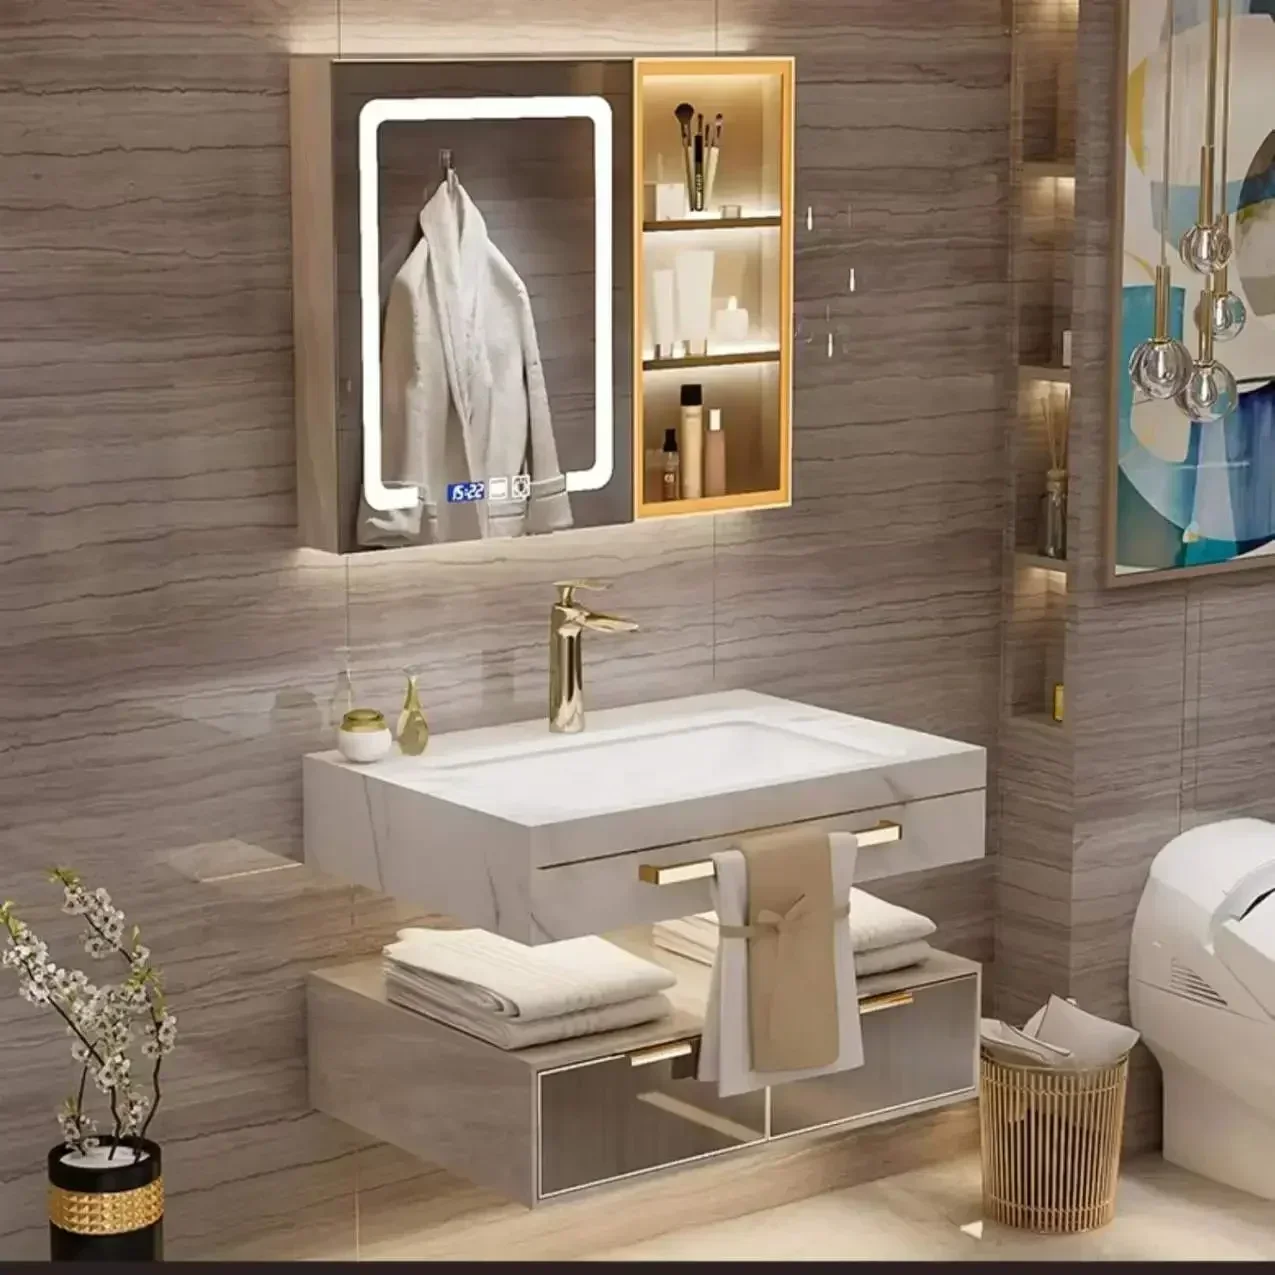 Modern Slate With Smart Mirror Ceramic Double Washbasin Bathroom Vanity Cabinets Under Sink Bathroom Furniture New